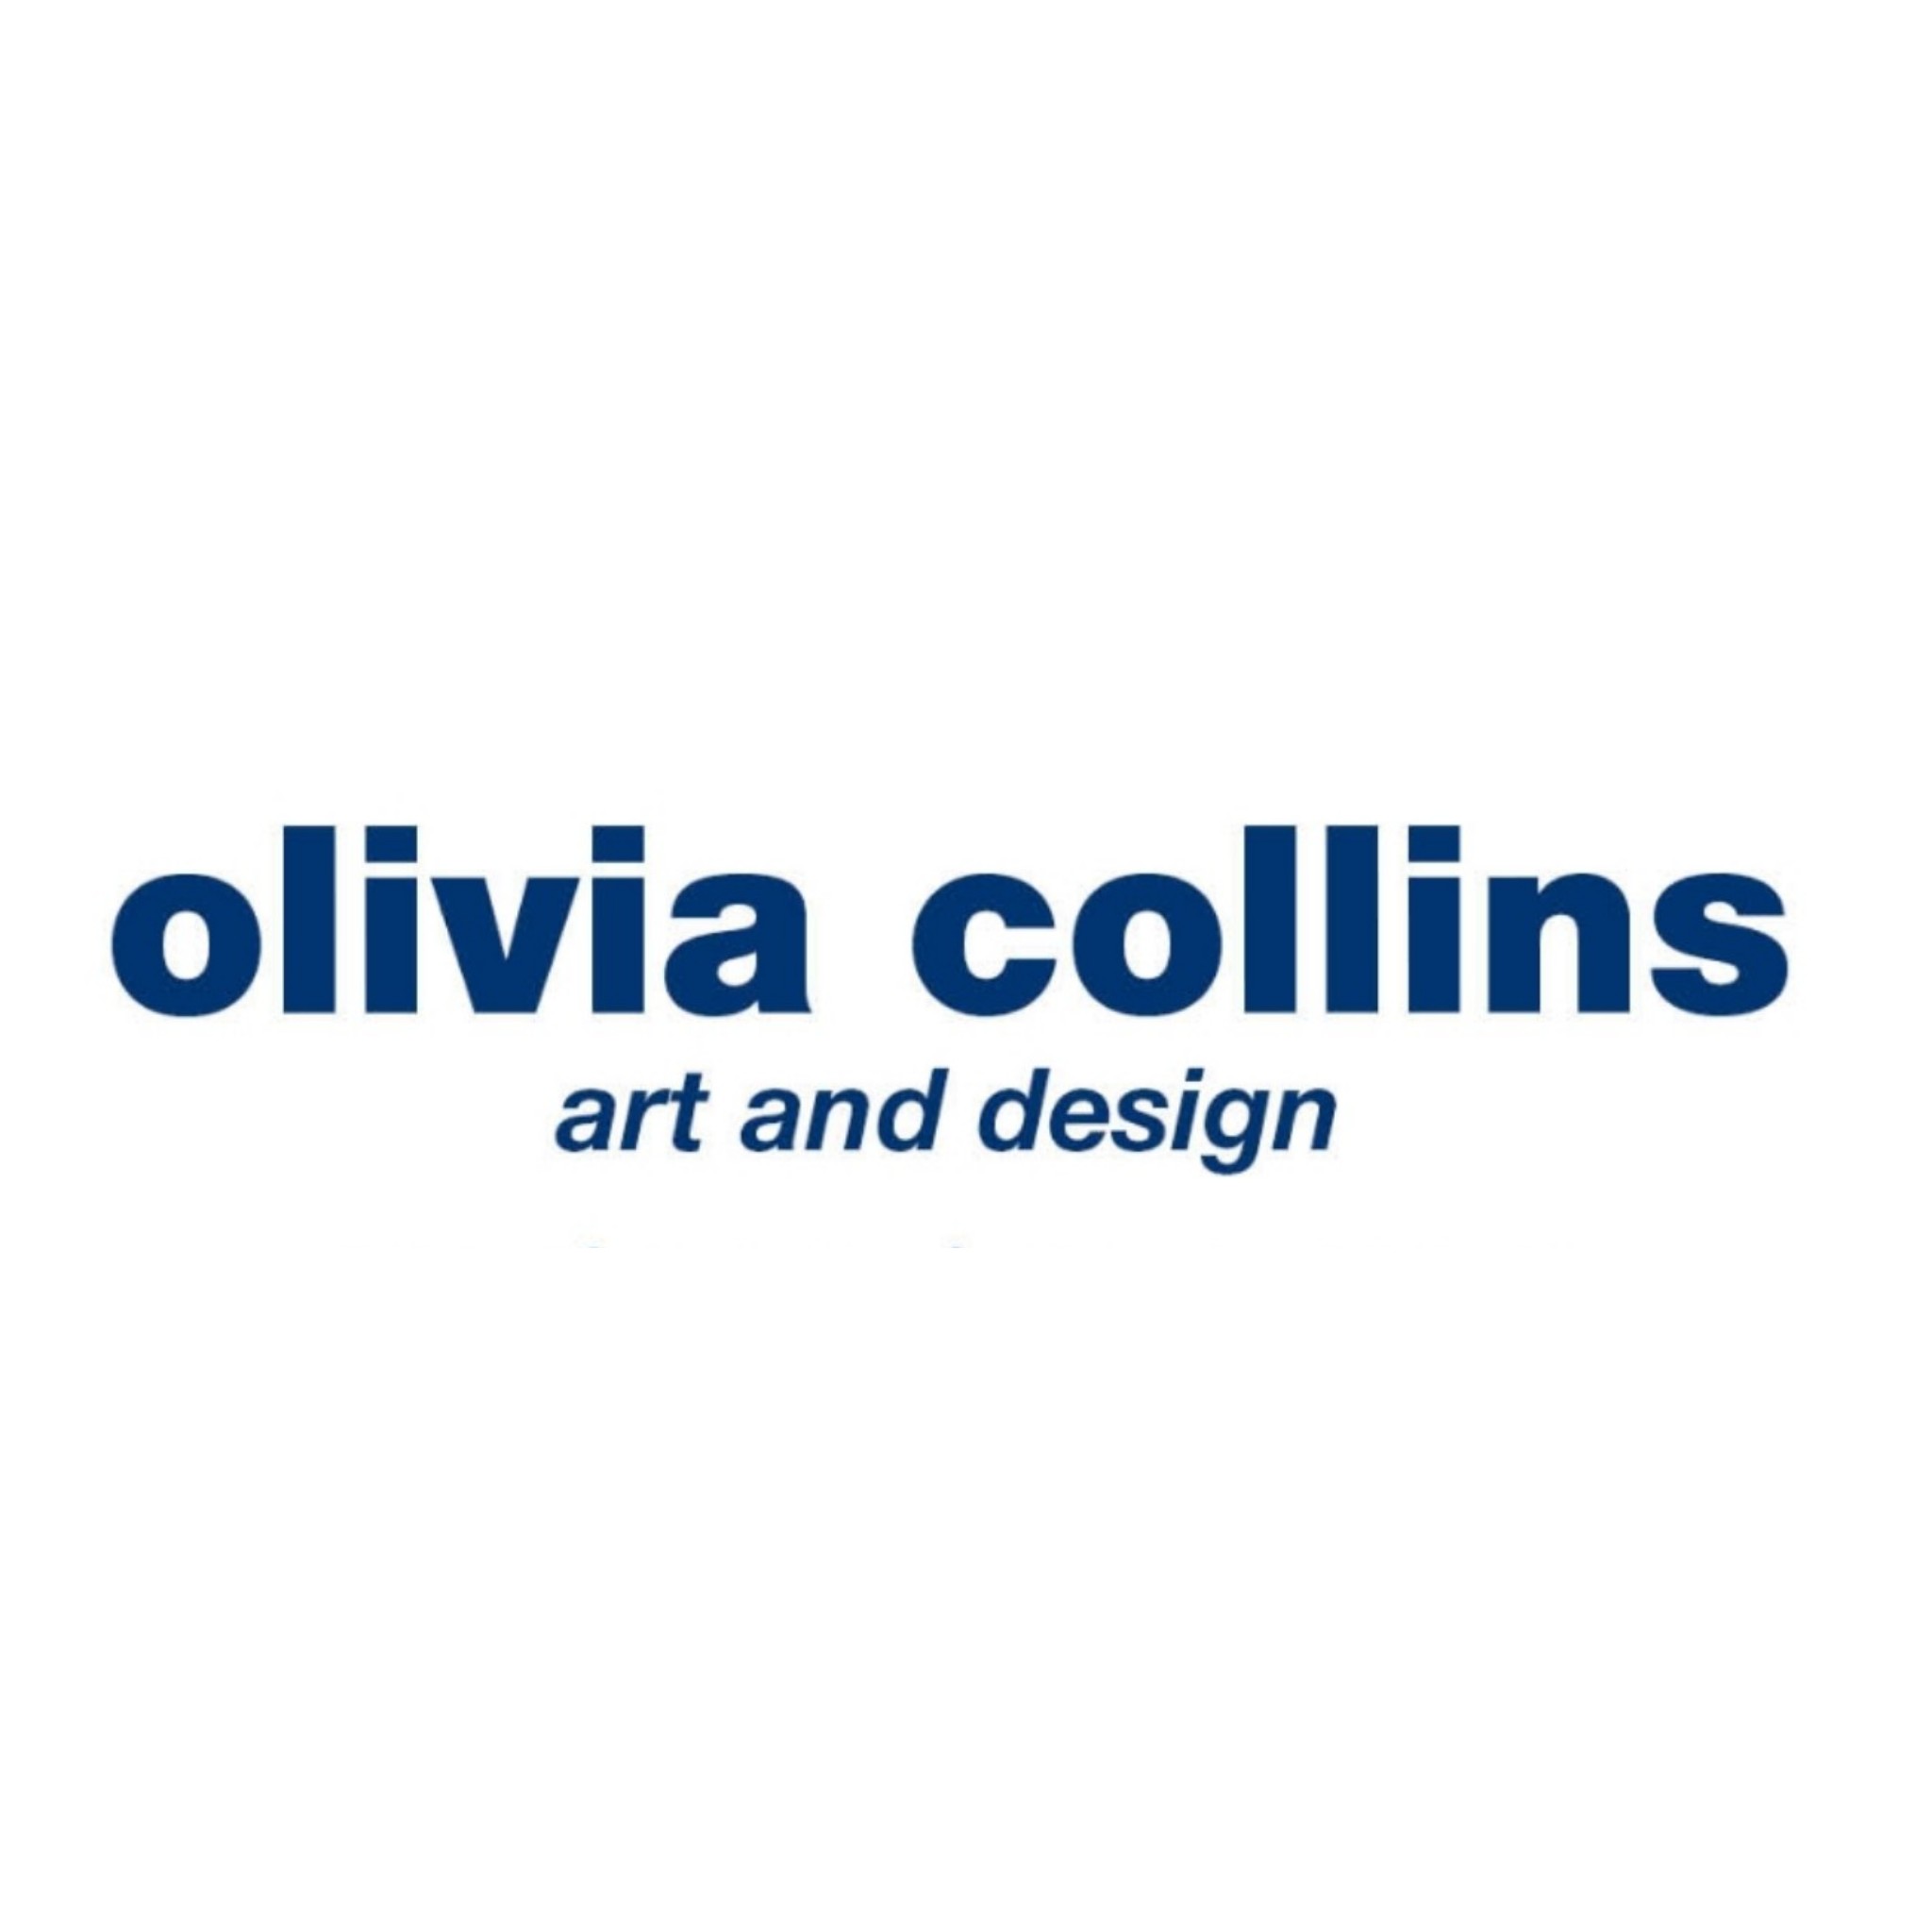 Olivia Collins Art and Design